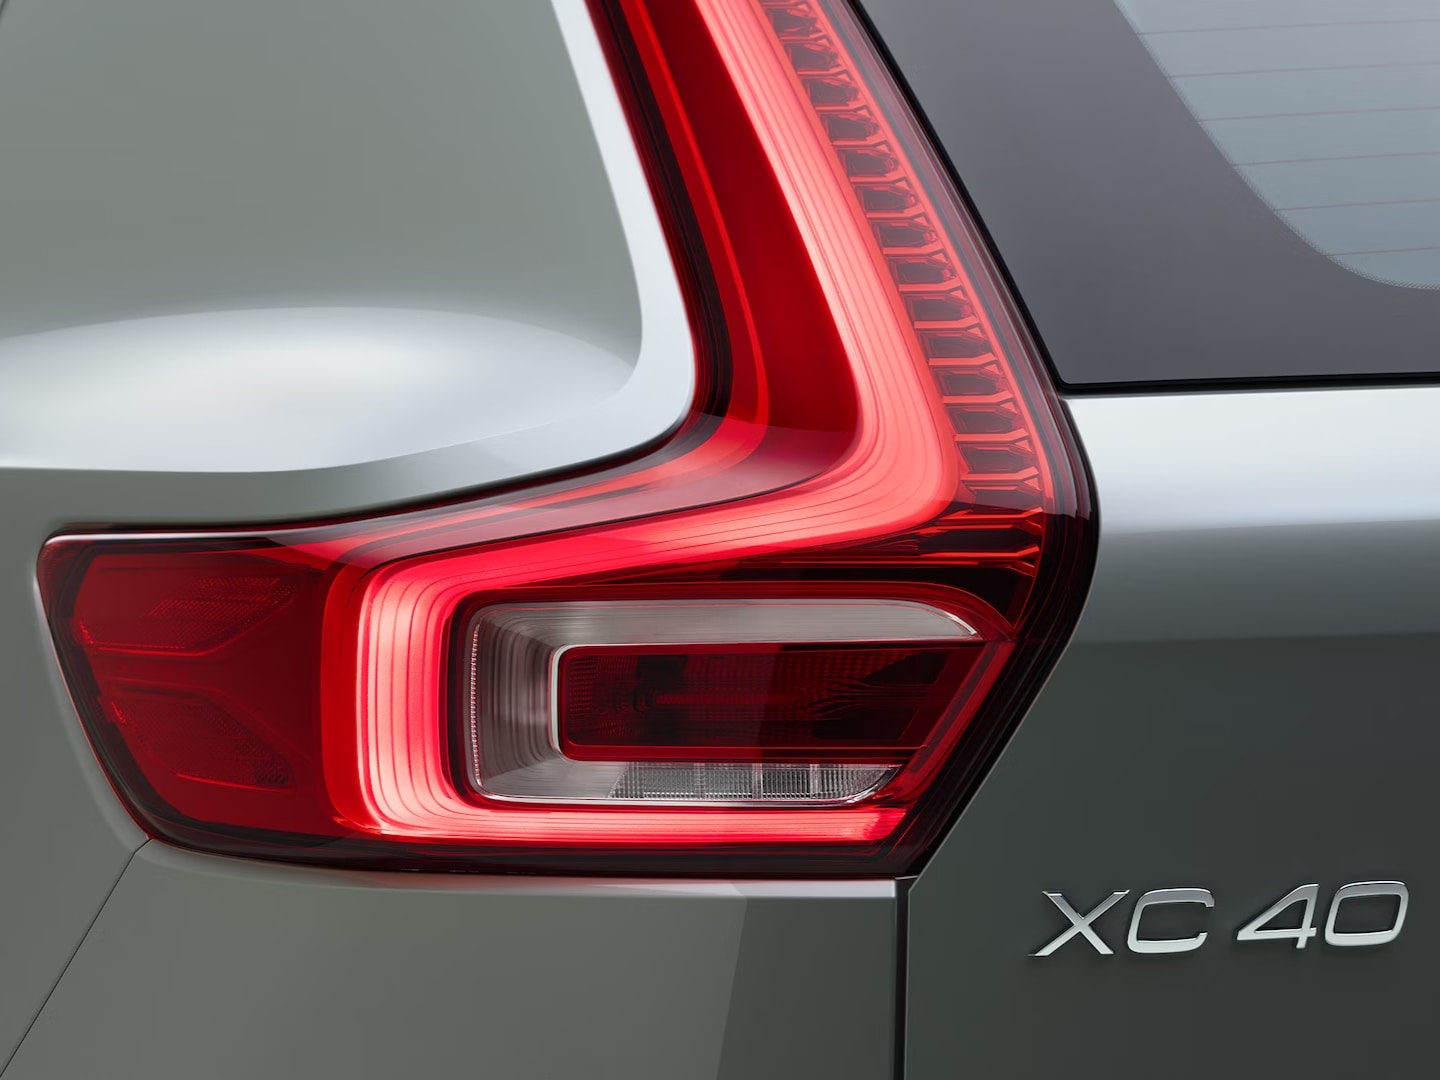 LED rear lights of the Volvo XC40 mild hybrid SUV for enhanced visibility.